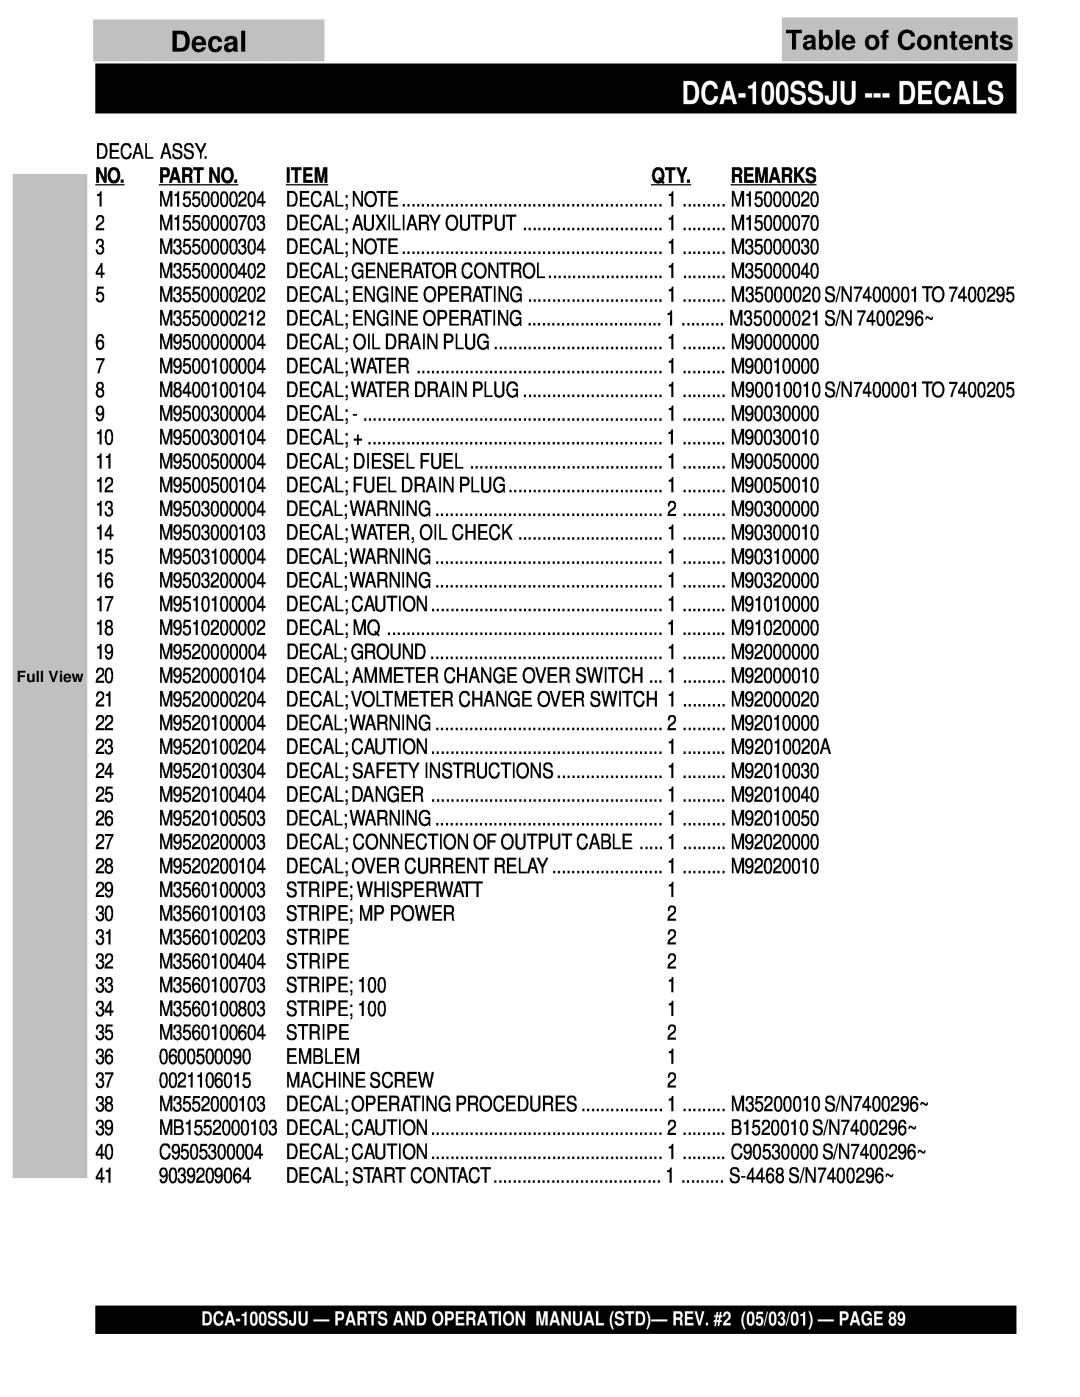 Multiquip DCA-100SSJU operation manual Decals, Table of Contents 